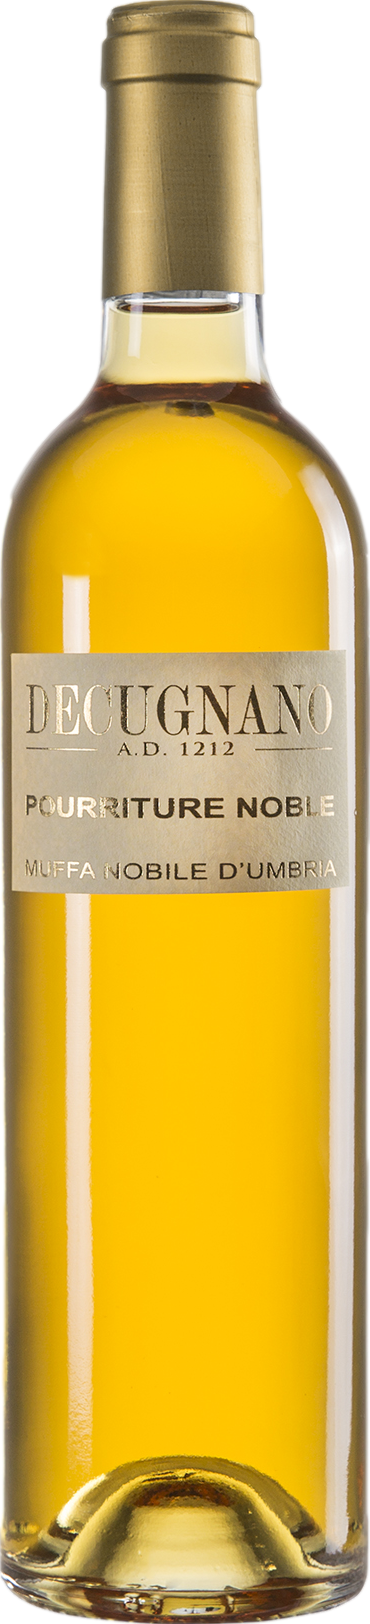 Product image of Decugnano dei Barbi Pourriture Noble 2019 from 8wines